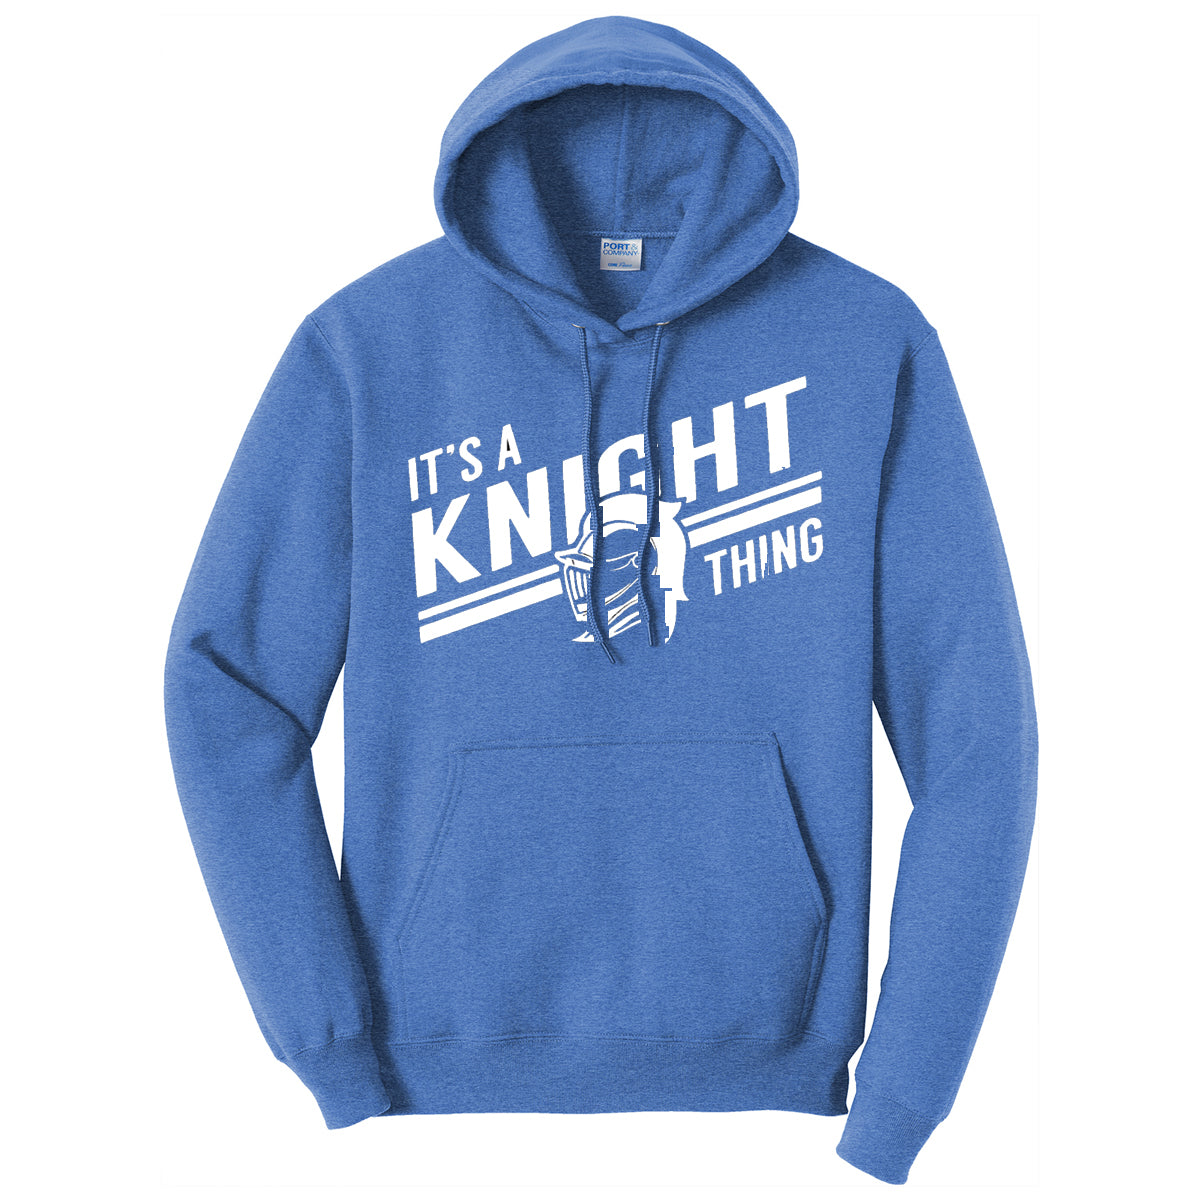 Windsor - It's A Knight Thing - Heather Royal (Tee/DriFit/Hoodie/Sweatshirt) - Southern Grace Creations